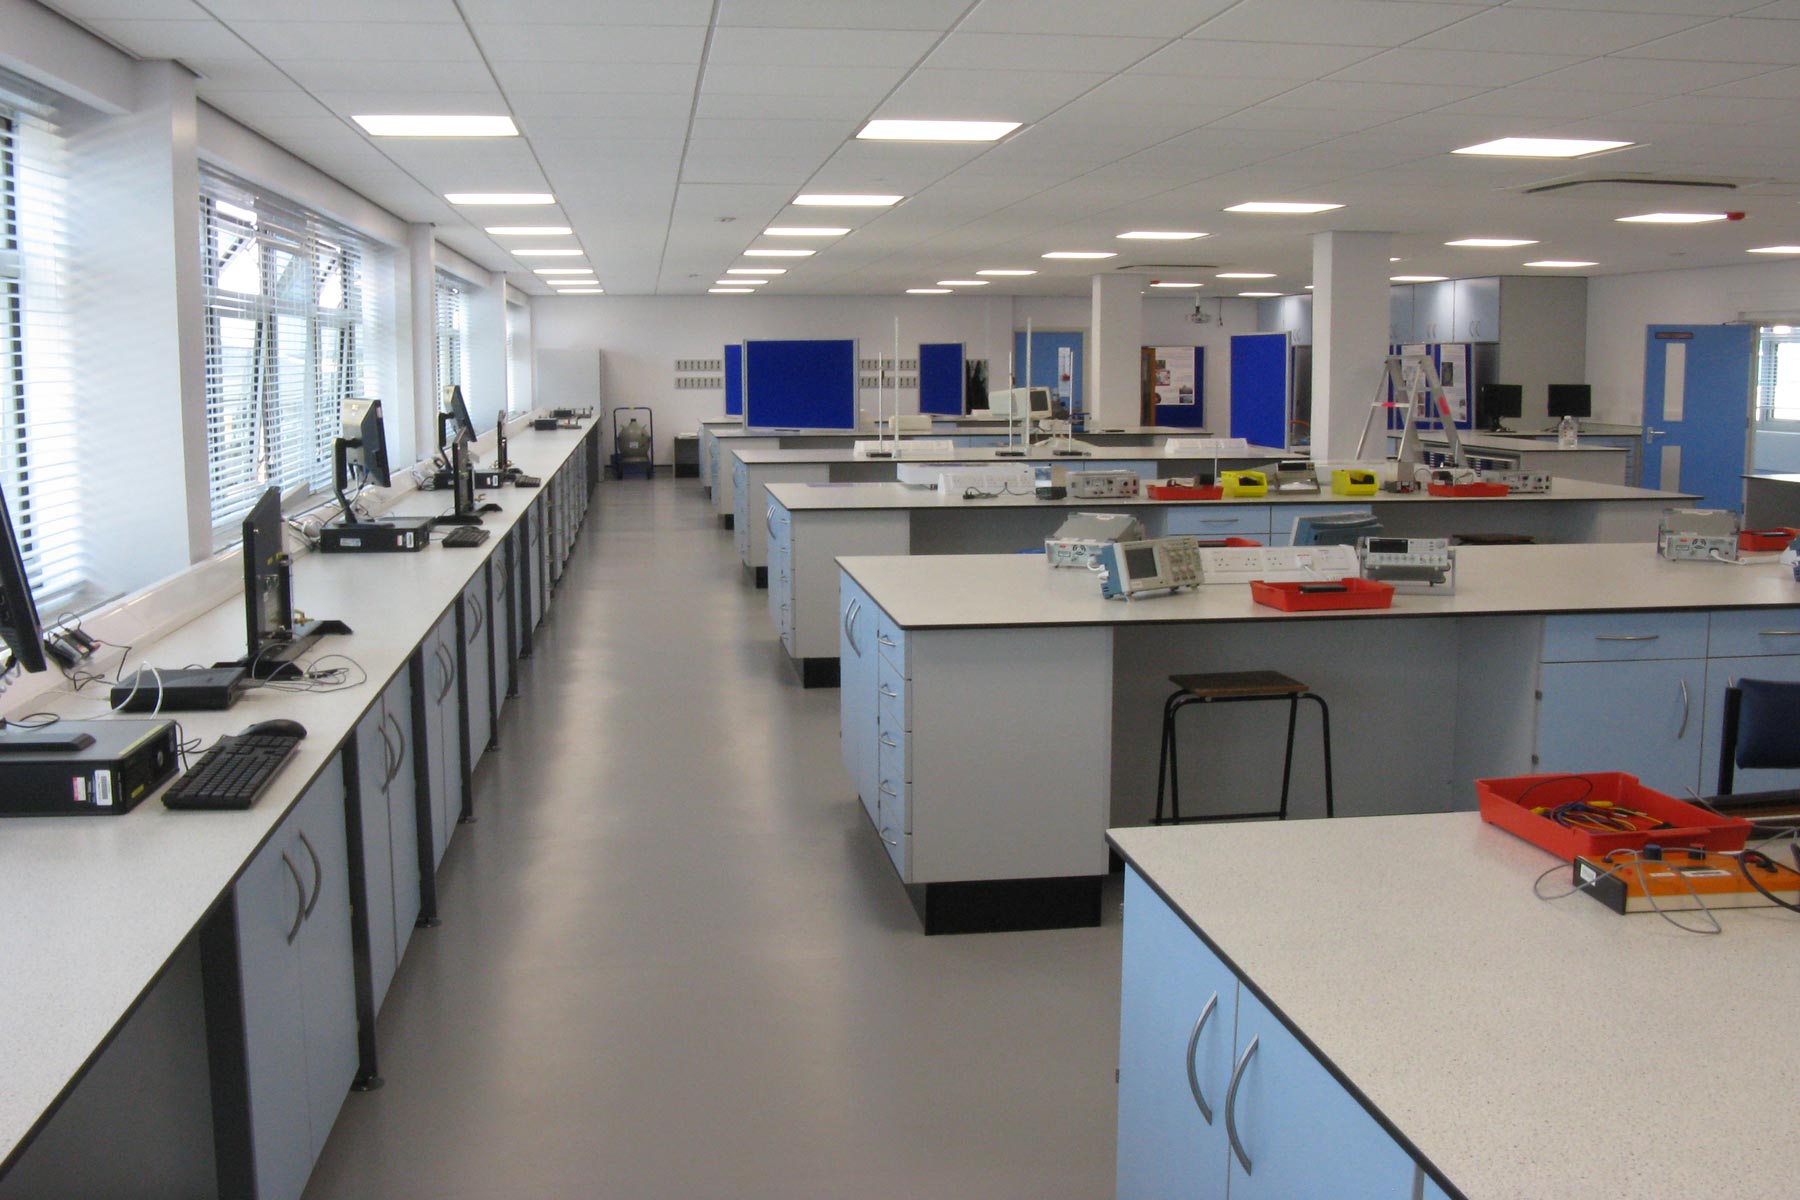 The University of Surrey Refurbished Physics Laboratories